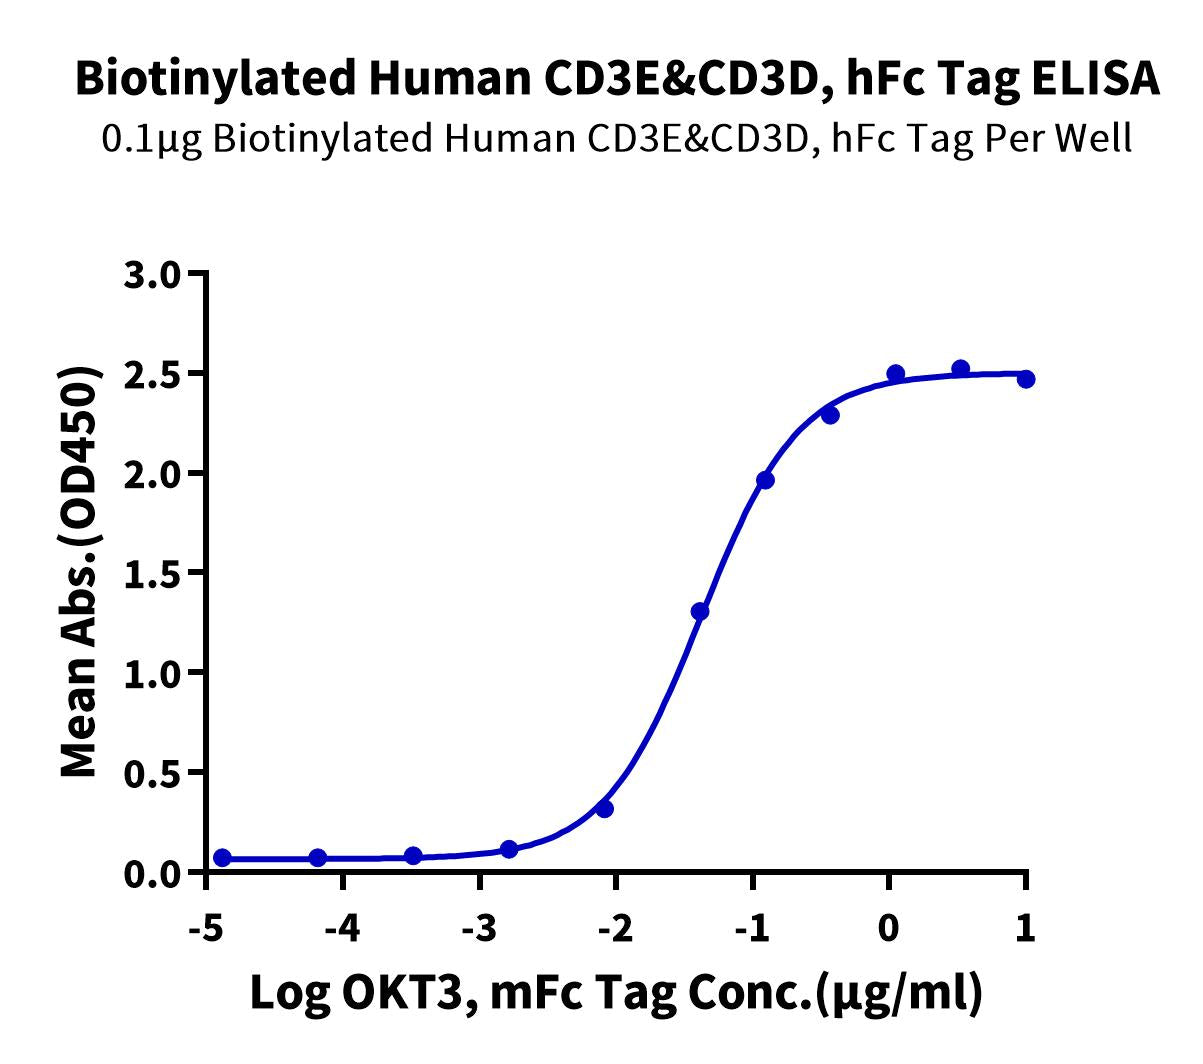 Biotinylated Human CD3E&CD3D/CD3 epsilon&CD3 delta Protein (CD3-HM505B)